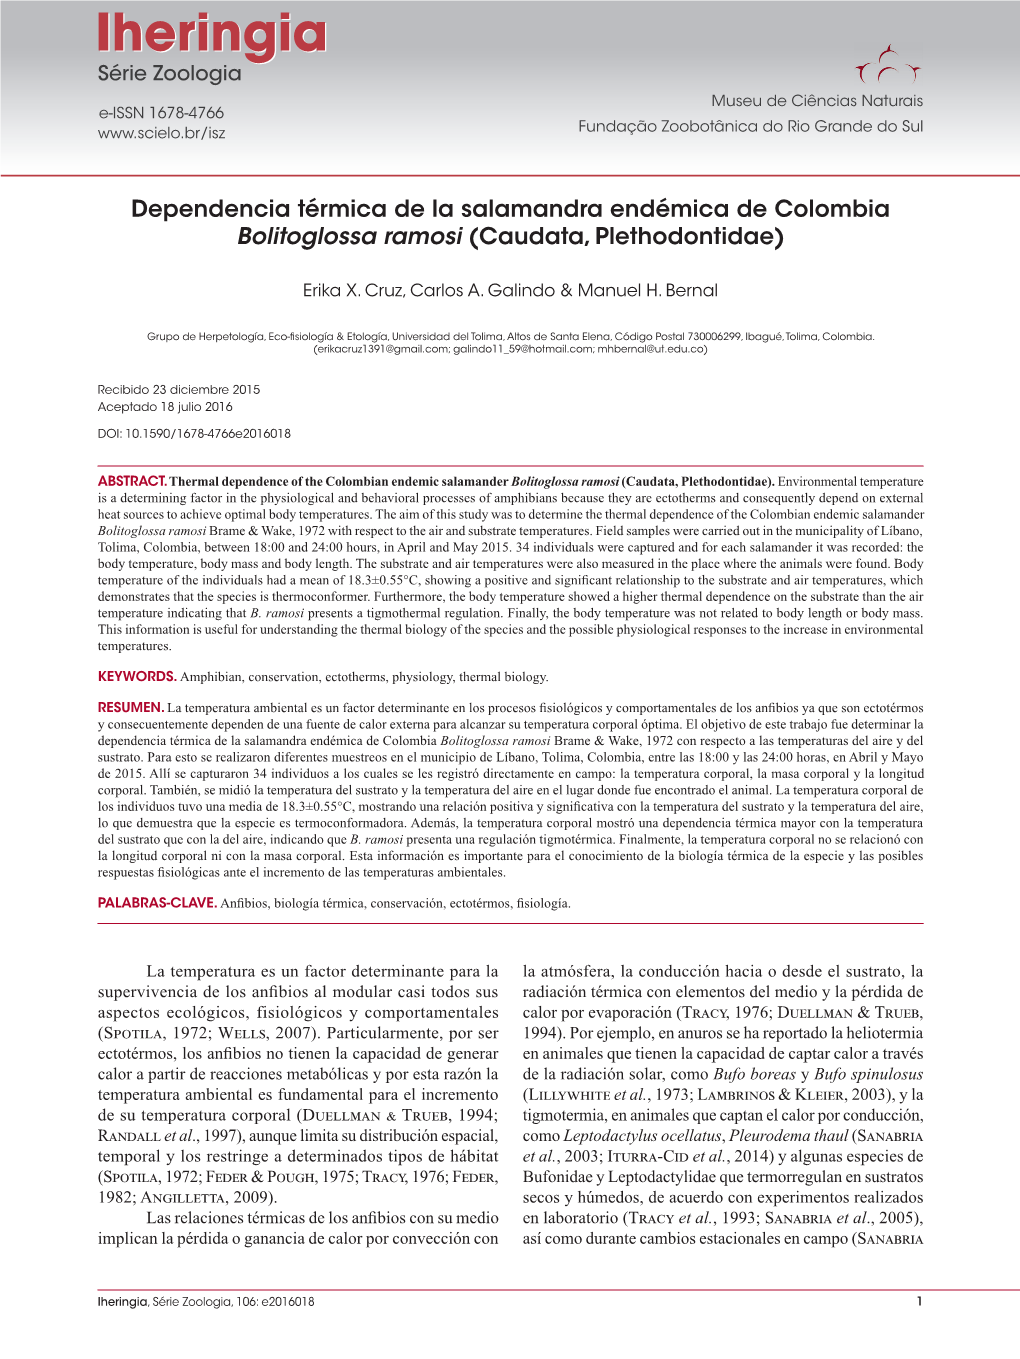 Dependencia Térmica De La Salamandra Endémica De Colombia Bolitoglossa Ramosi (Caudata, Plethodontidae)